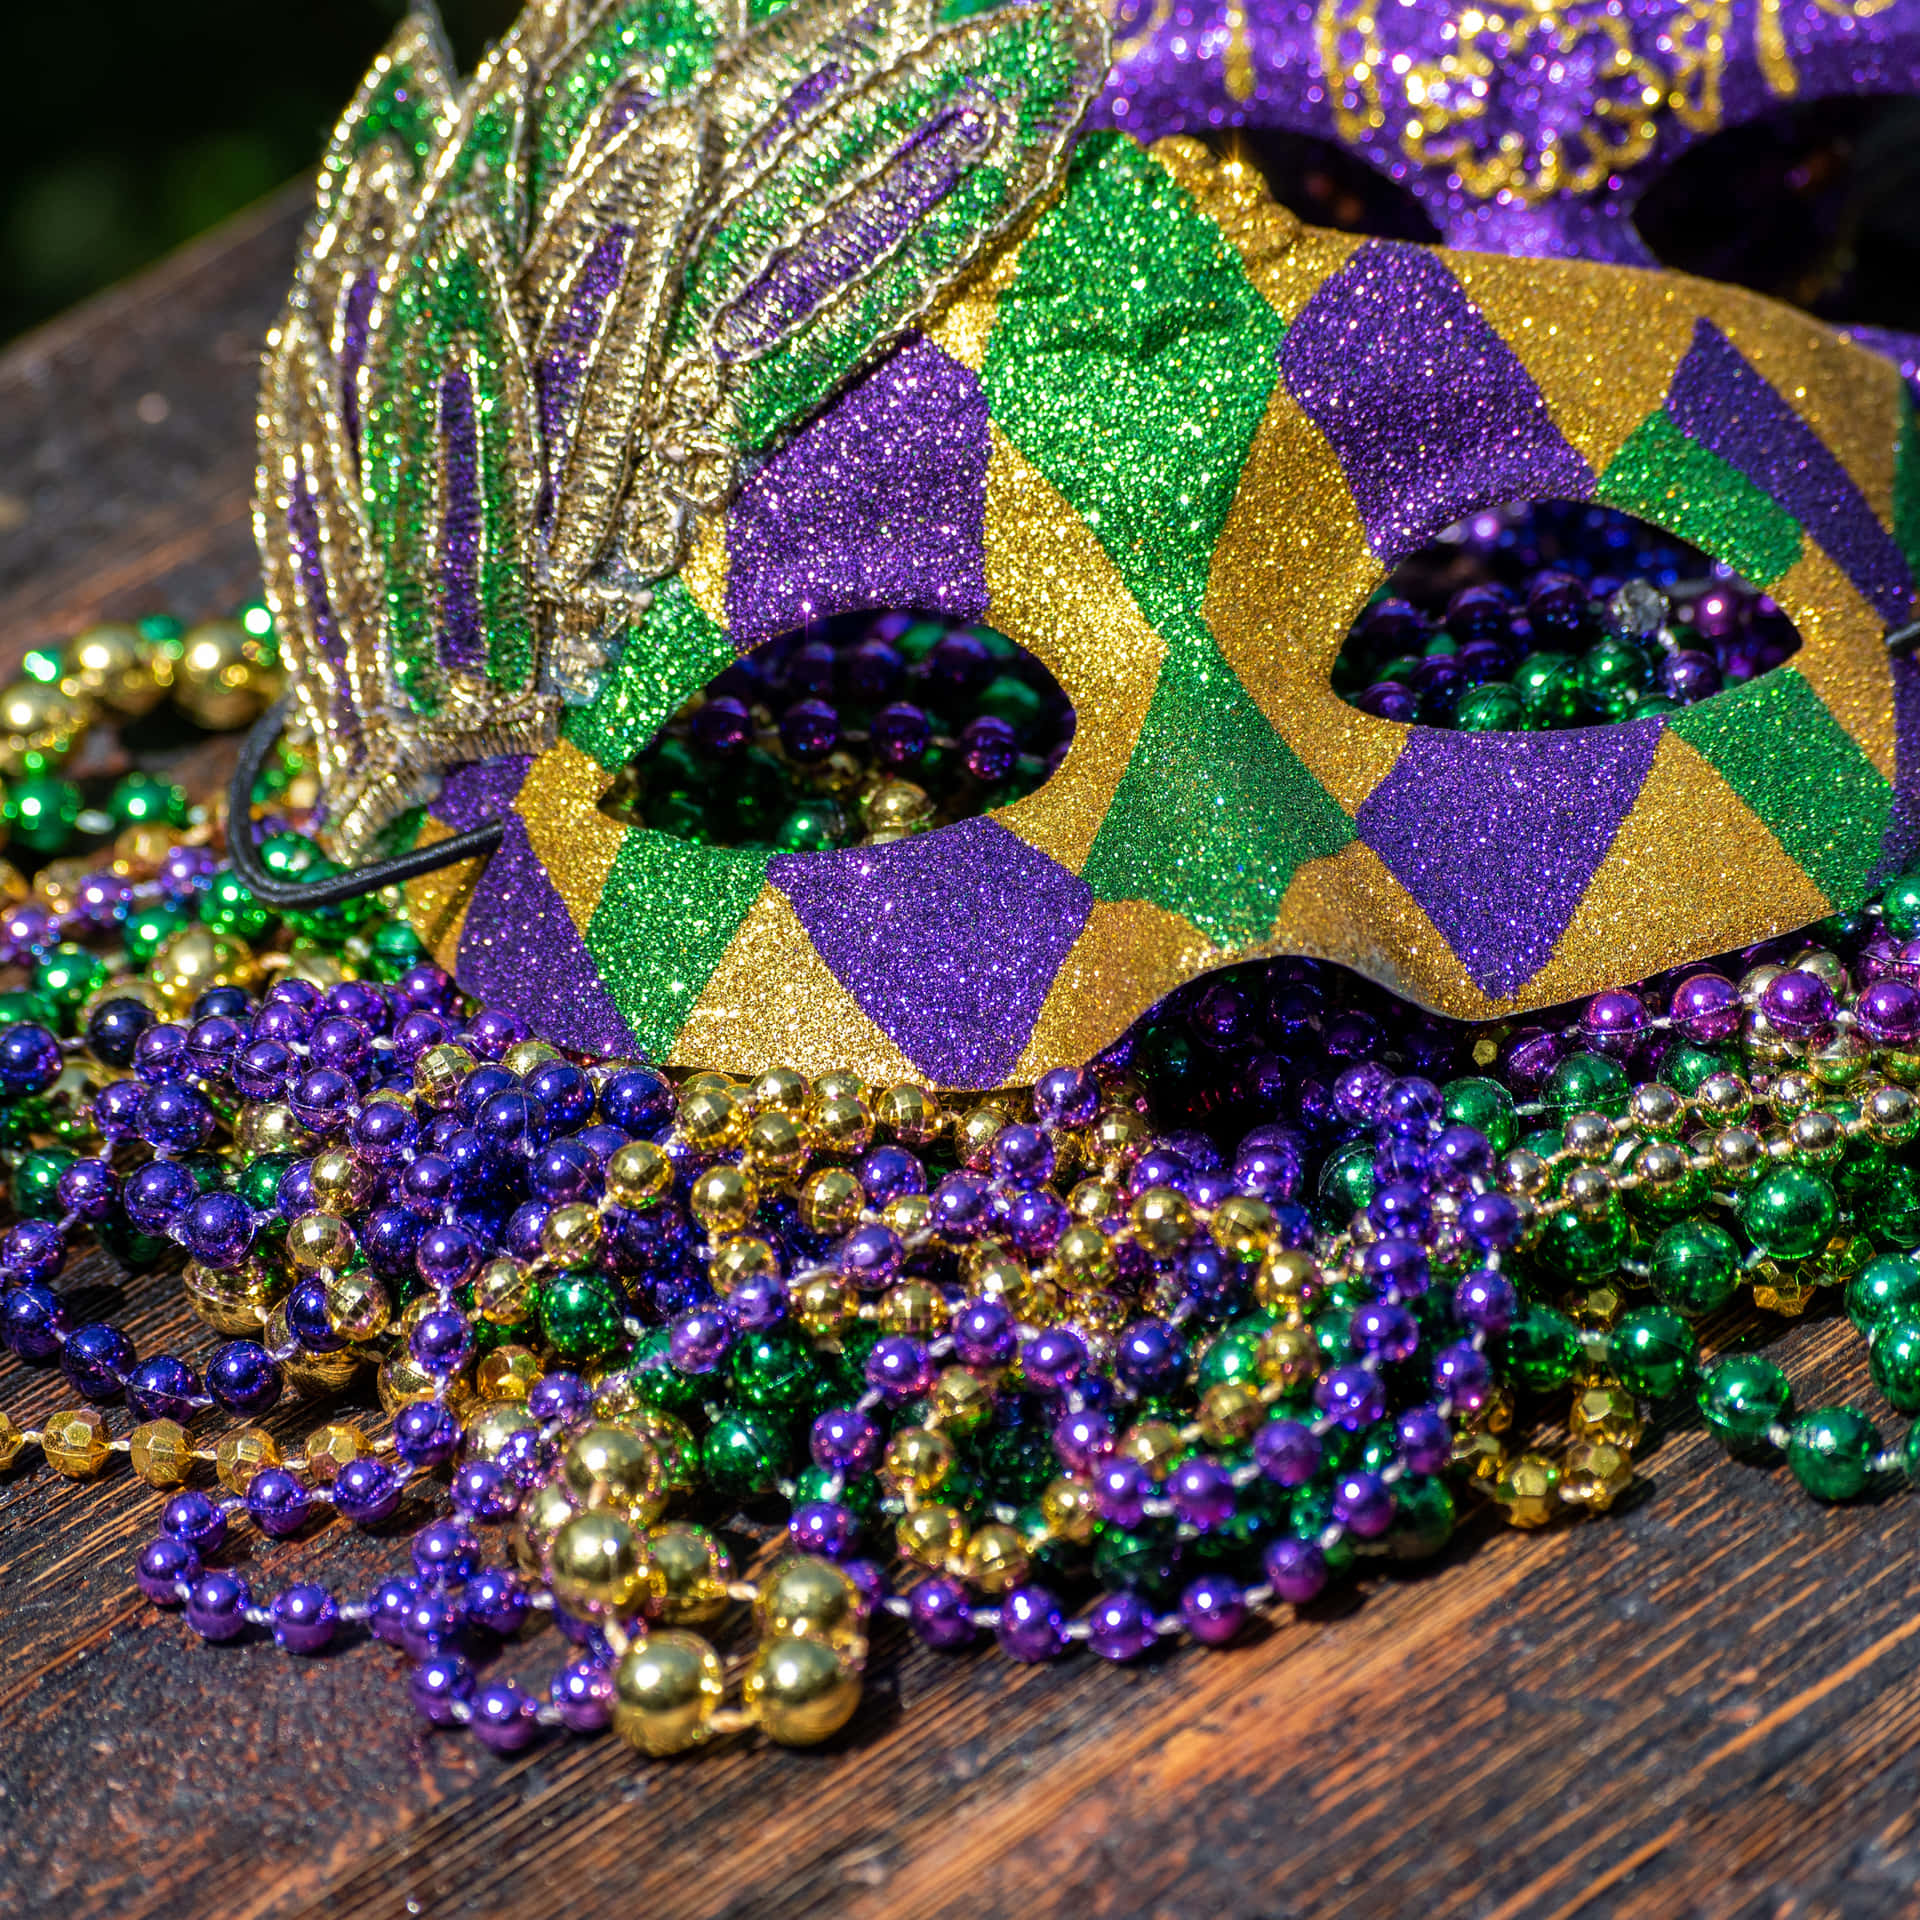 Celebrating Mardi Gras in New Orleans, Louisiana